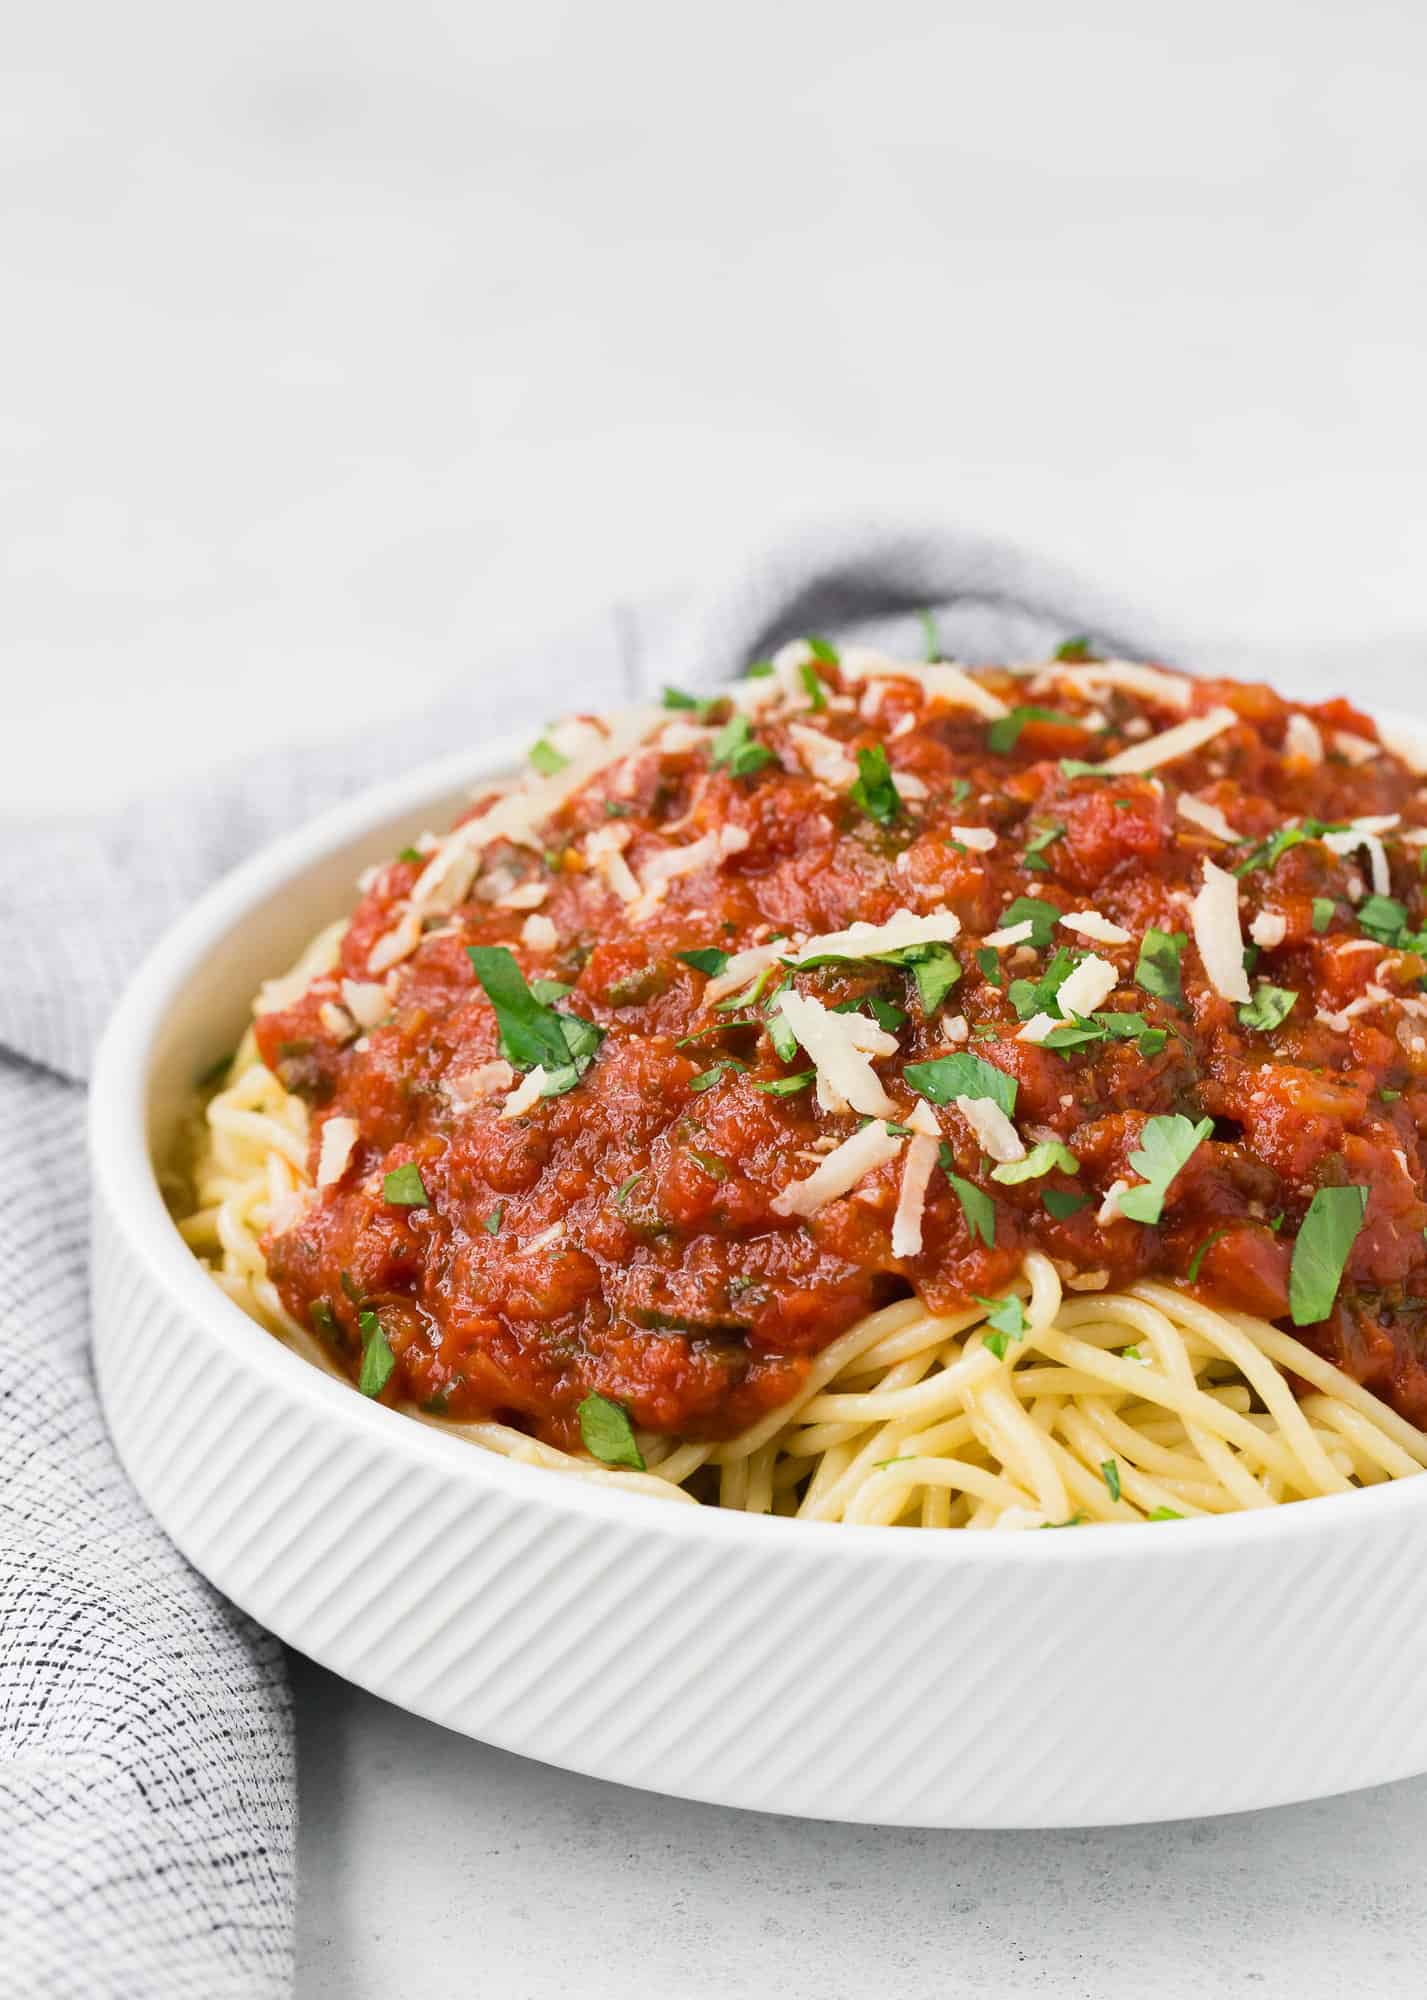 Spaghetti with spaghetti sauce and cheese.